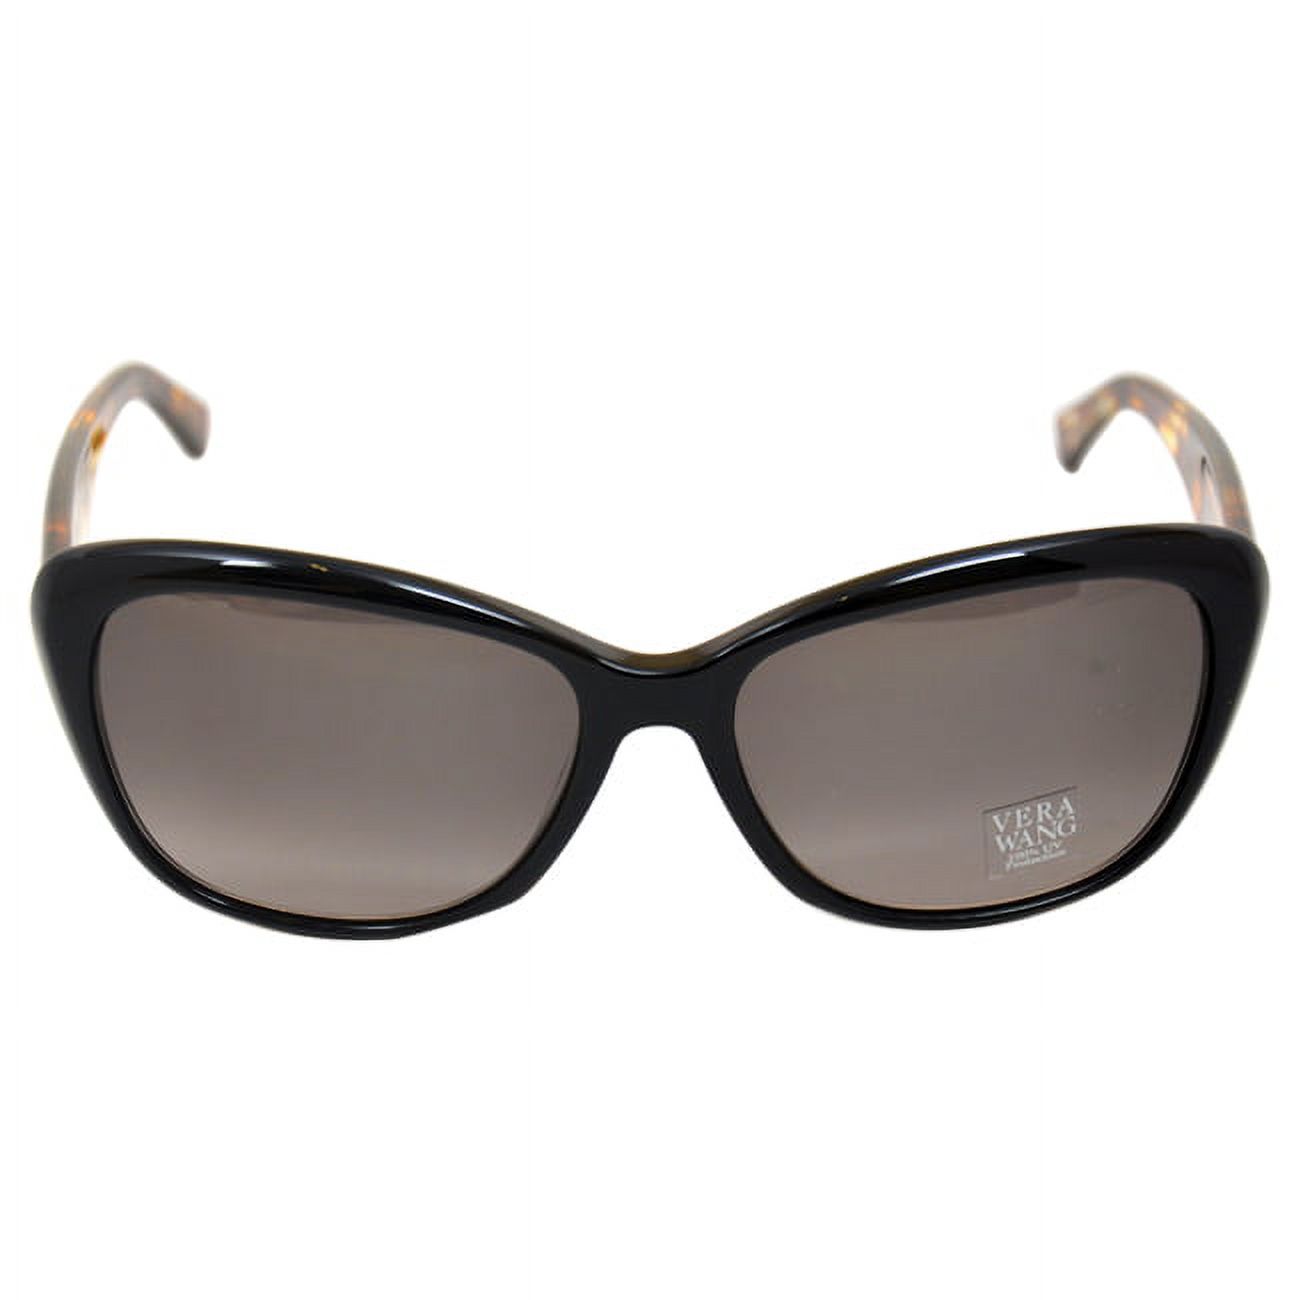 V400 - Black Vera Wang 56-16-140 mm Sunglasses Women - image 1 of 5